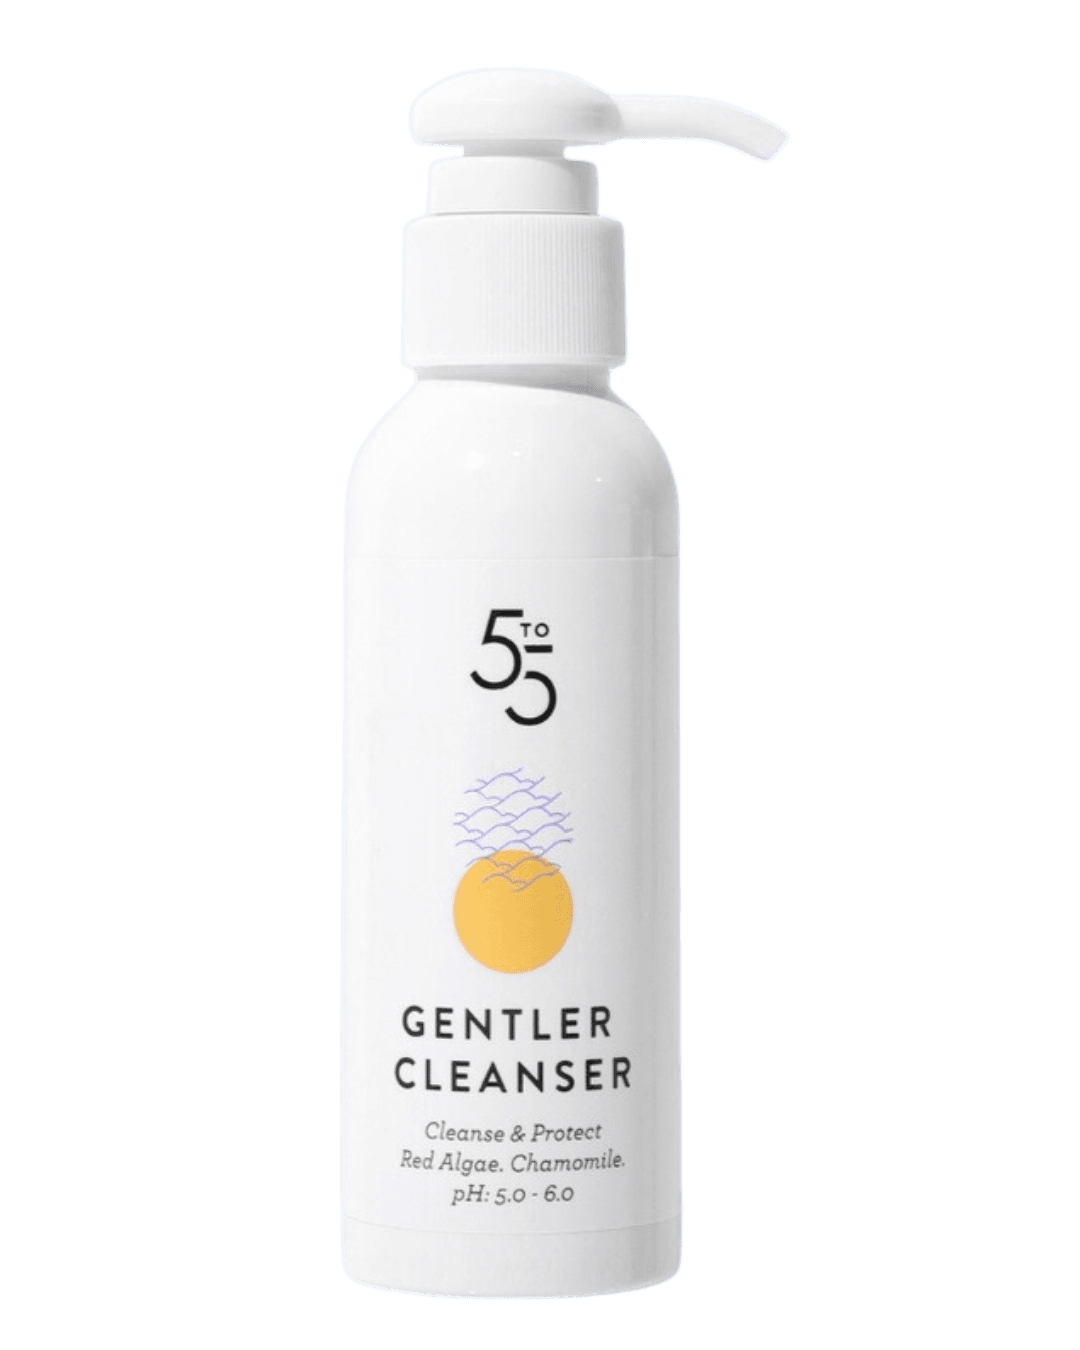 5to5 Gentler Cleanser